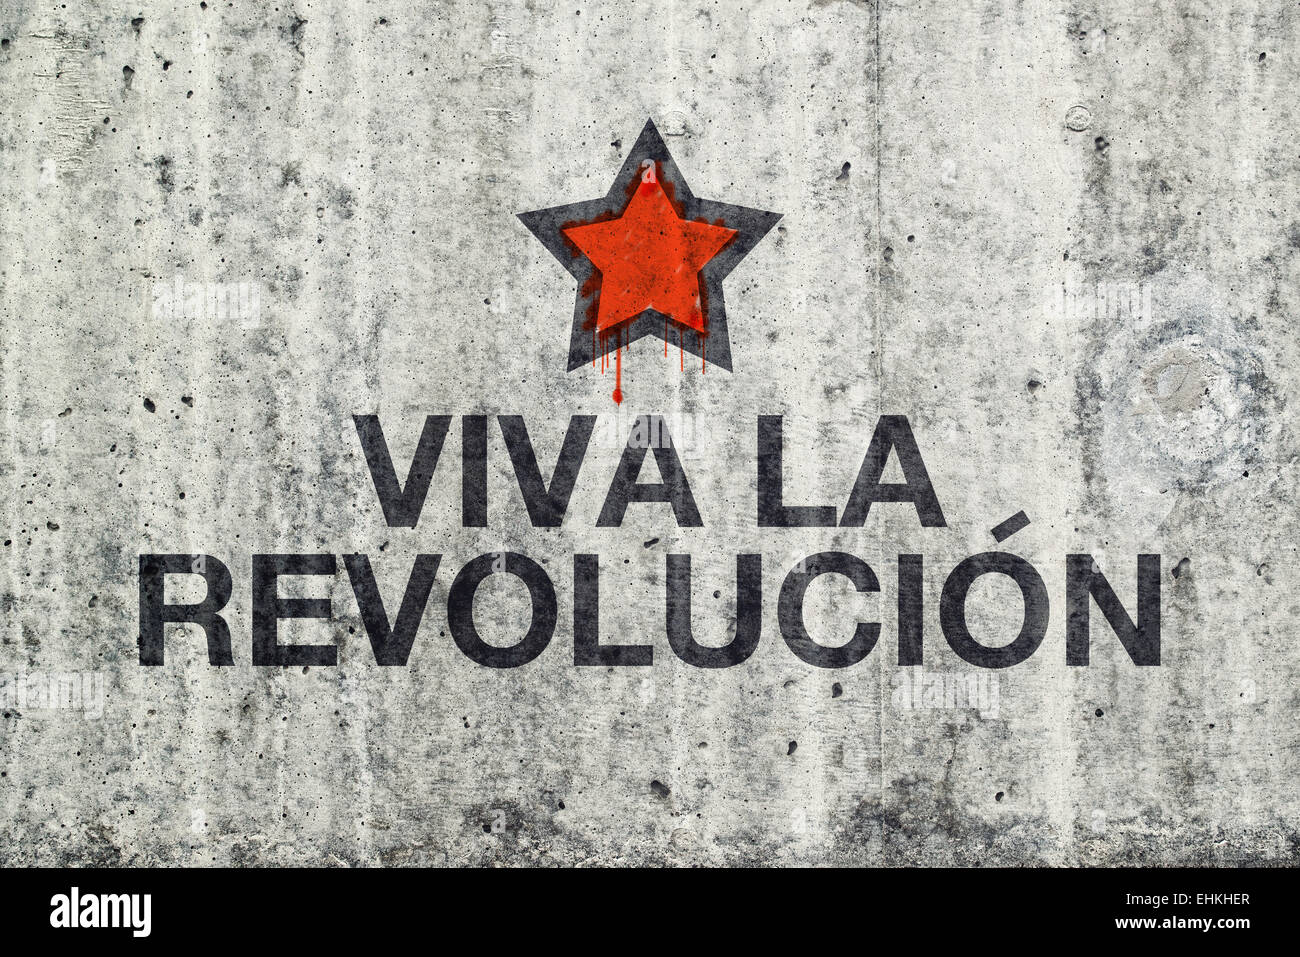 Viva La Revolucion Graffiti on Gray Cement Street Wall, Revolution Concept. Stock Photo